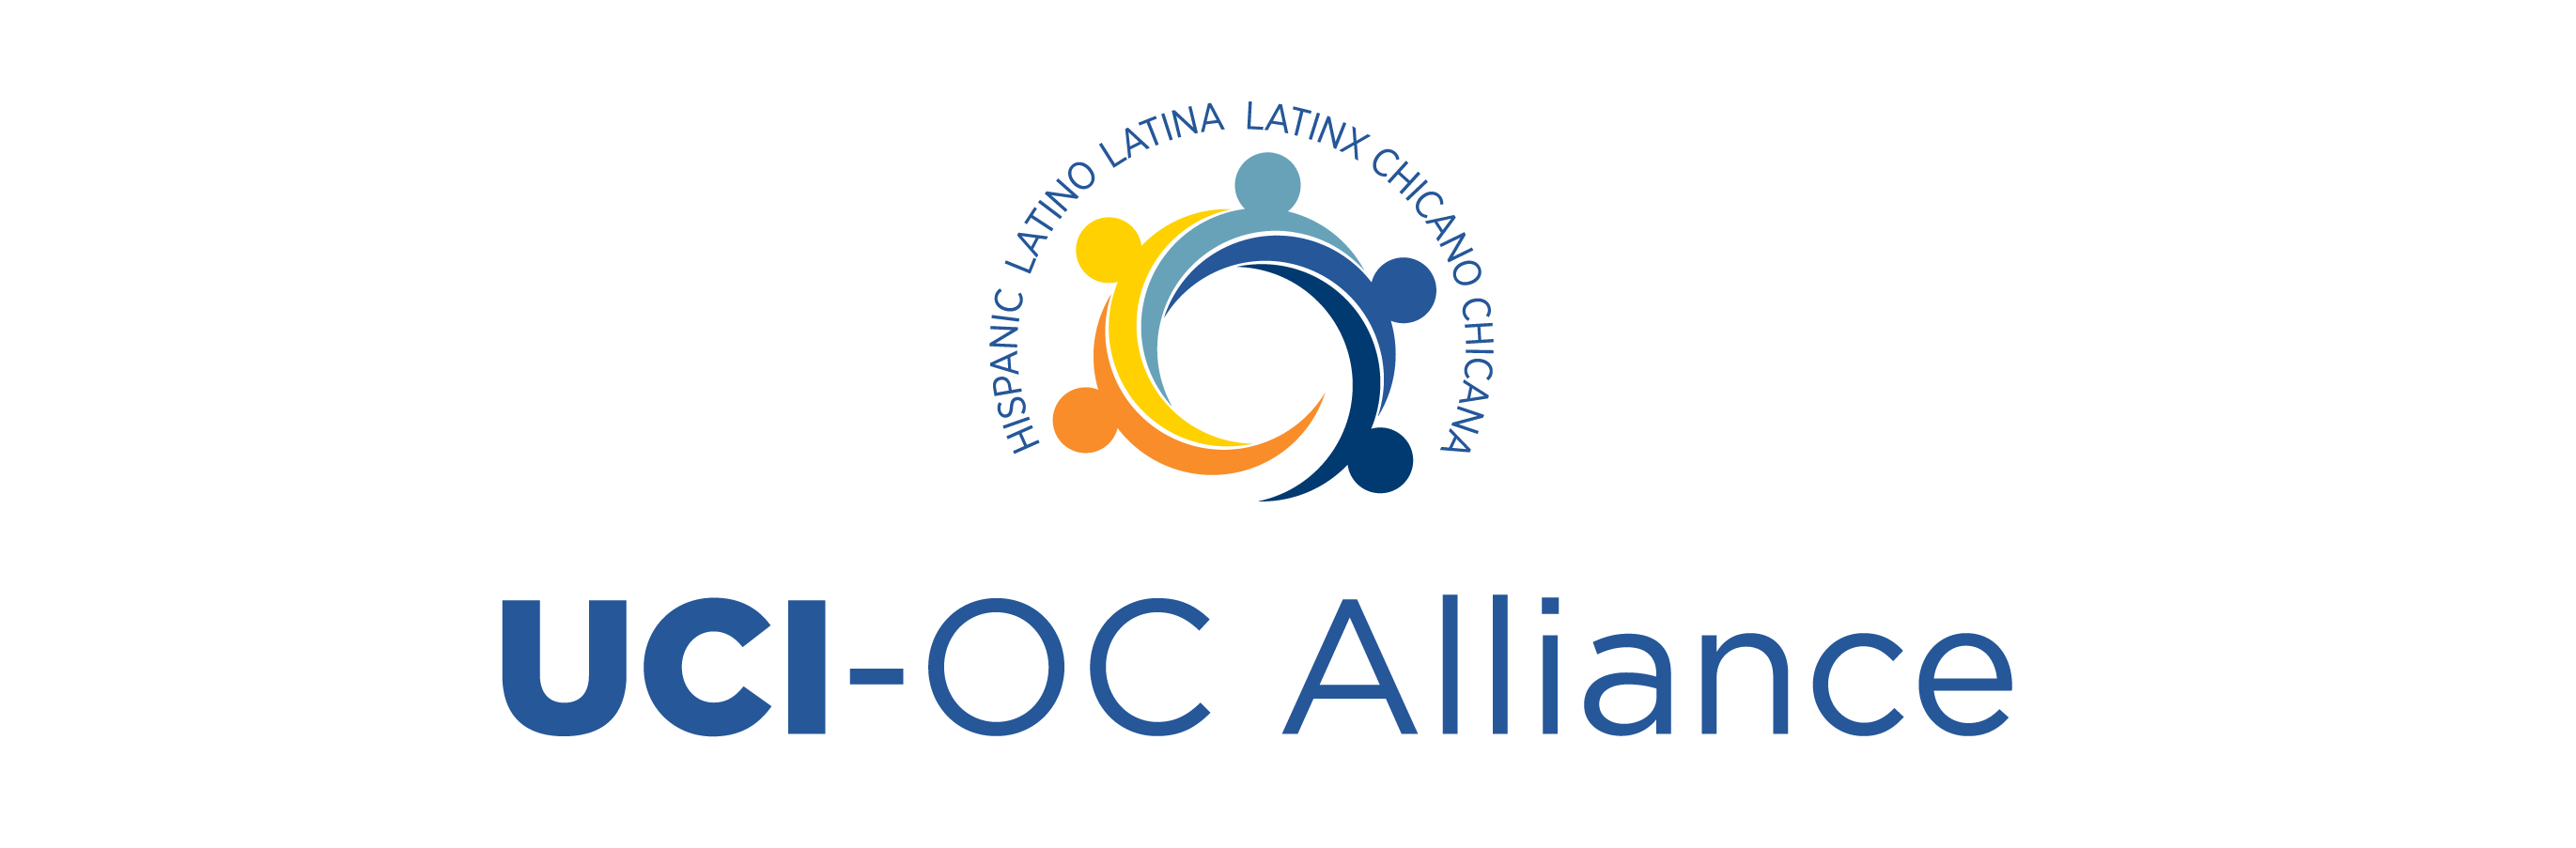 UCI-OC Alliance appoints new co-chair: Eloy Ortiz Oakley